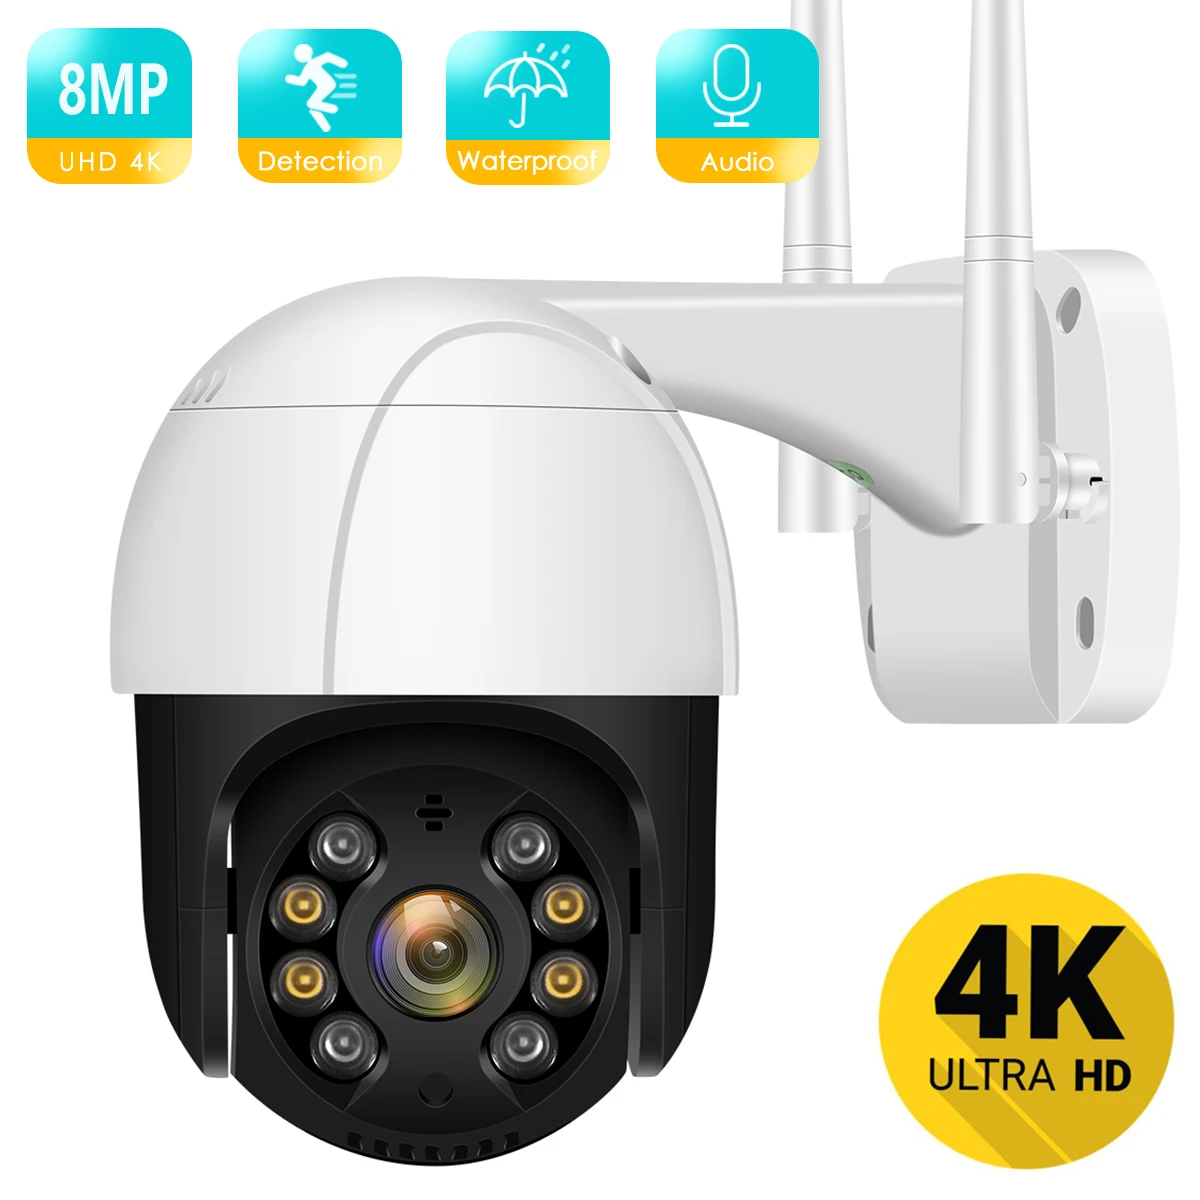 

BESDER 4K 8MP 5MP Ultra HD PTZ IP Camera AI Human Detection Waterproof WiFi Security Camera Auto Tracking P2P Video Surveillance